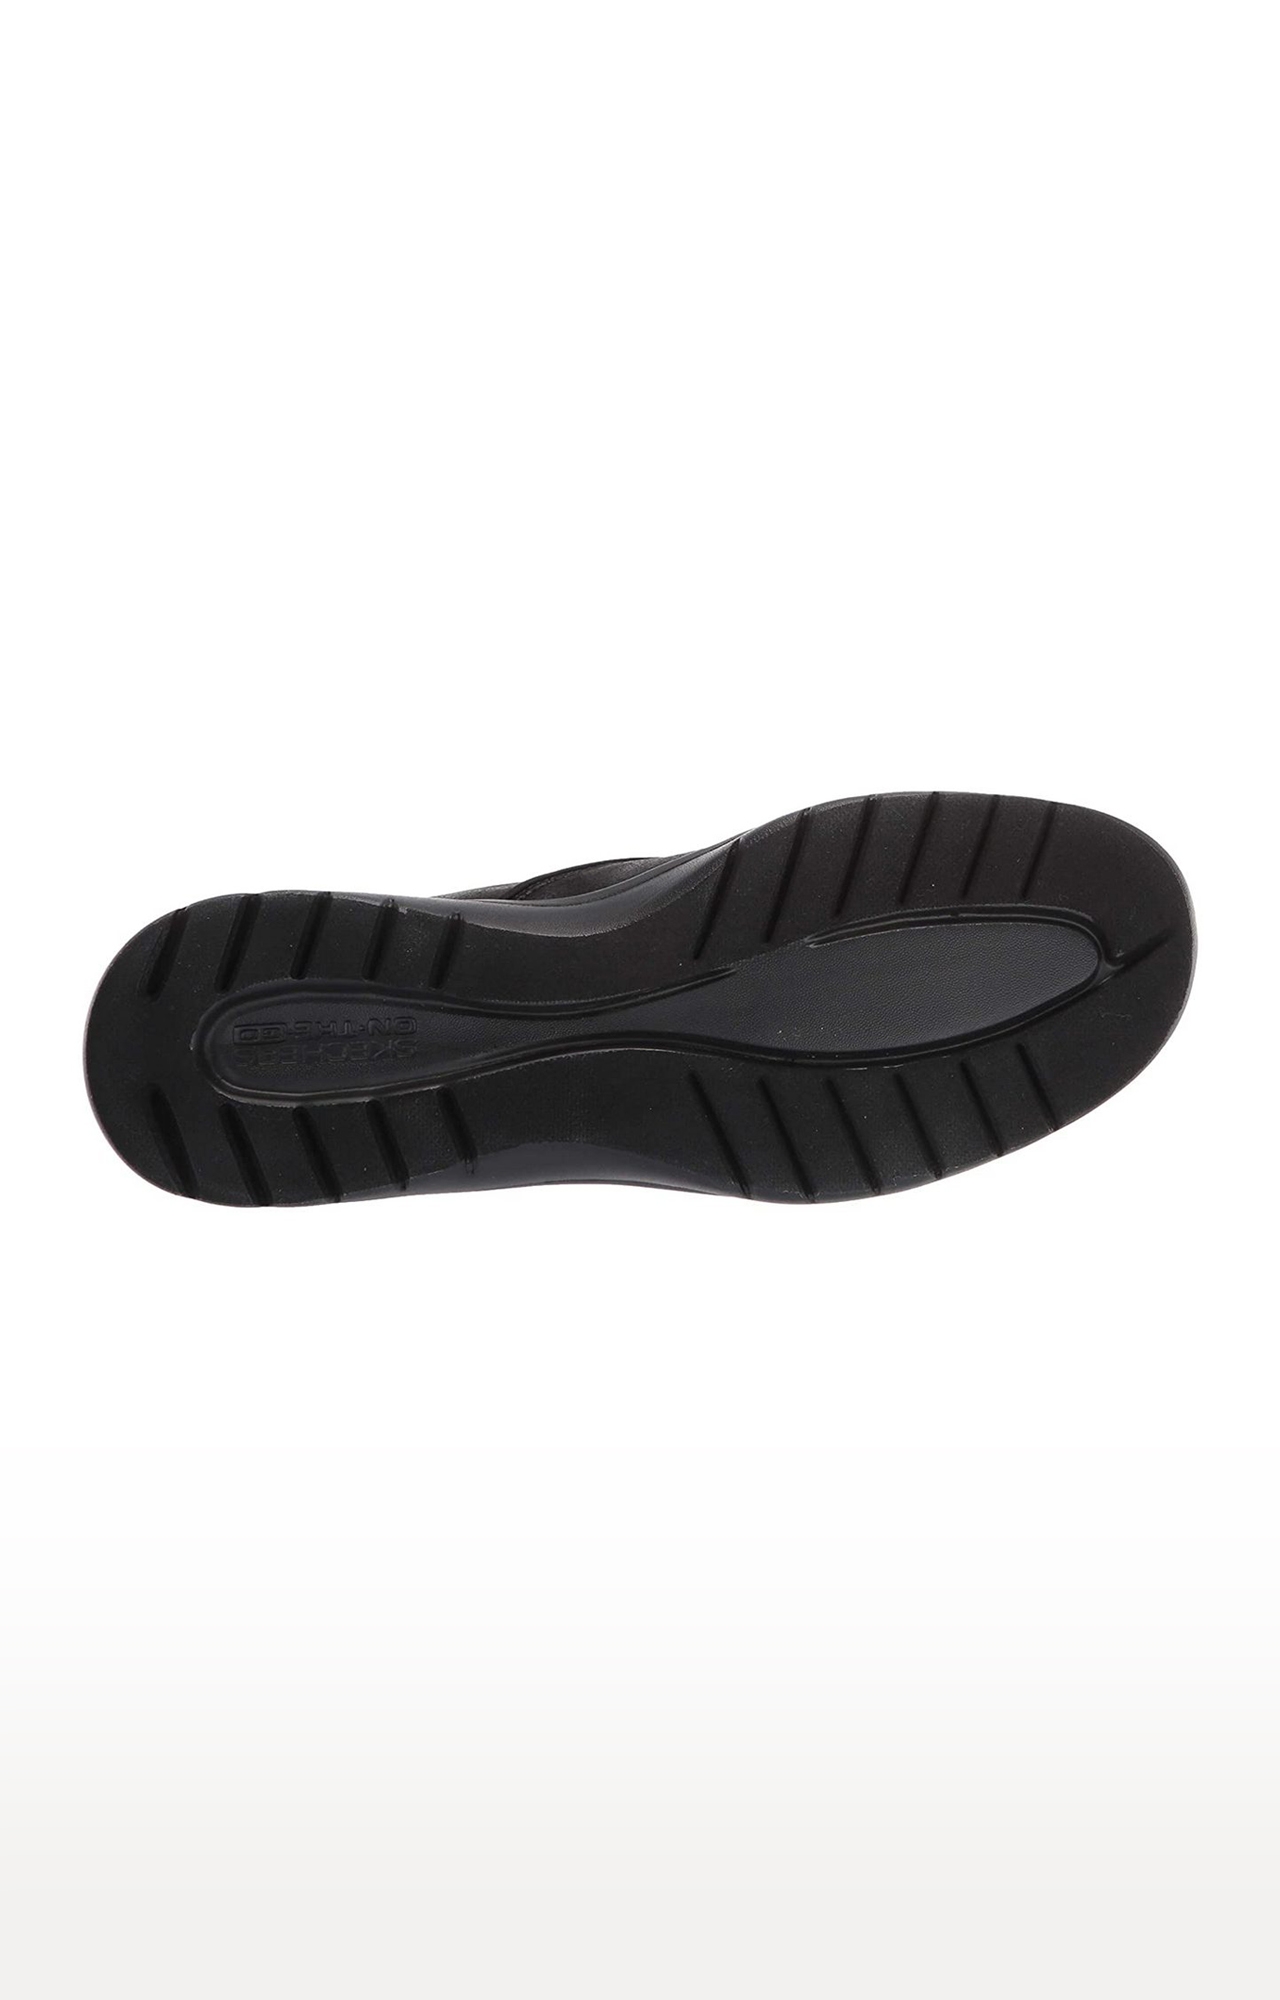 Skechers | Skechers womens ON-THE-GO FLEX LAVISH BLACK Walking Shoes - (136414-BBK) 3